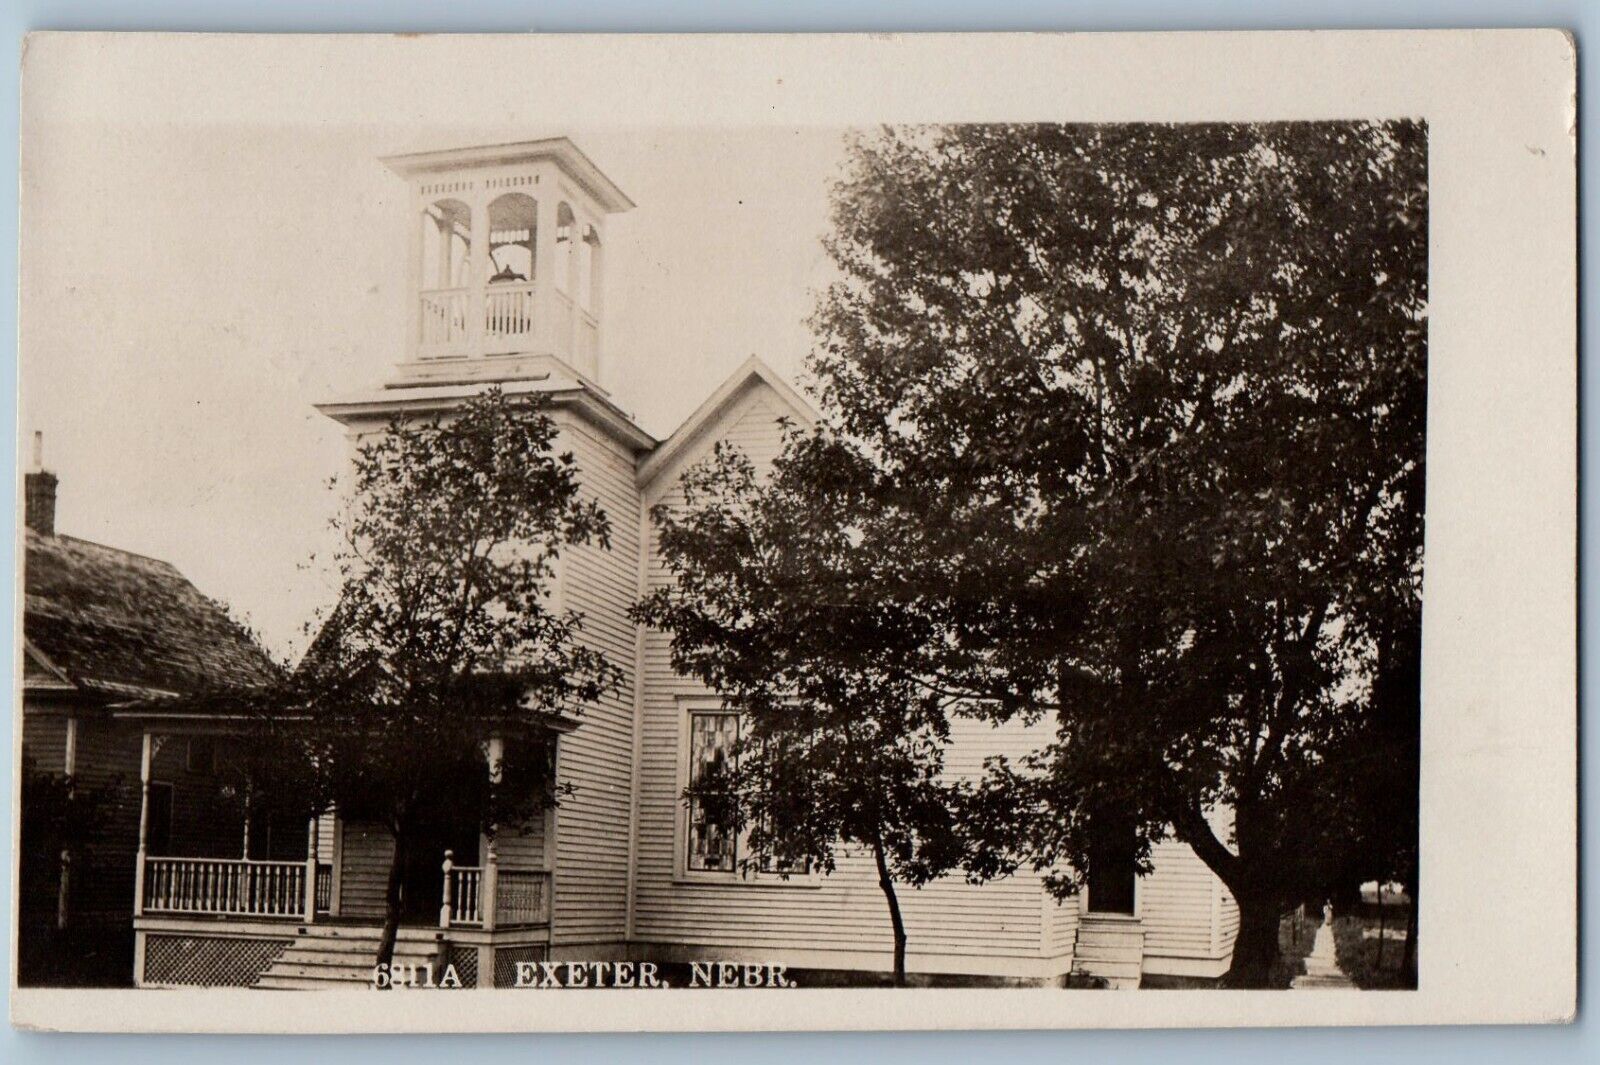 Exeter Nebraska NE Postcard RPPC Photo Church And Trees 1912 Posted Antique